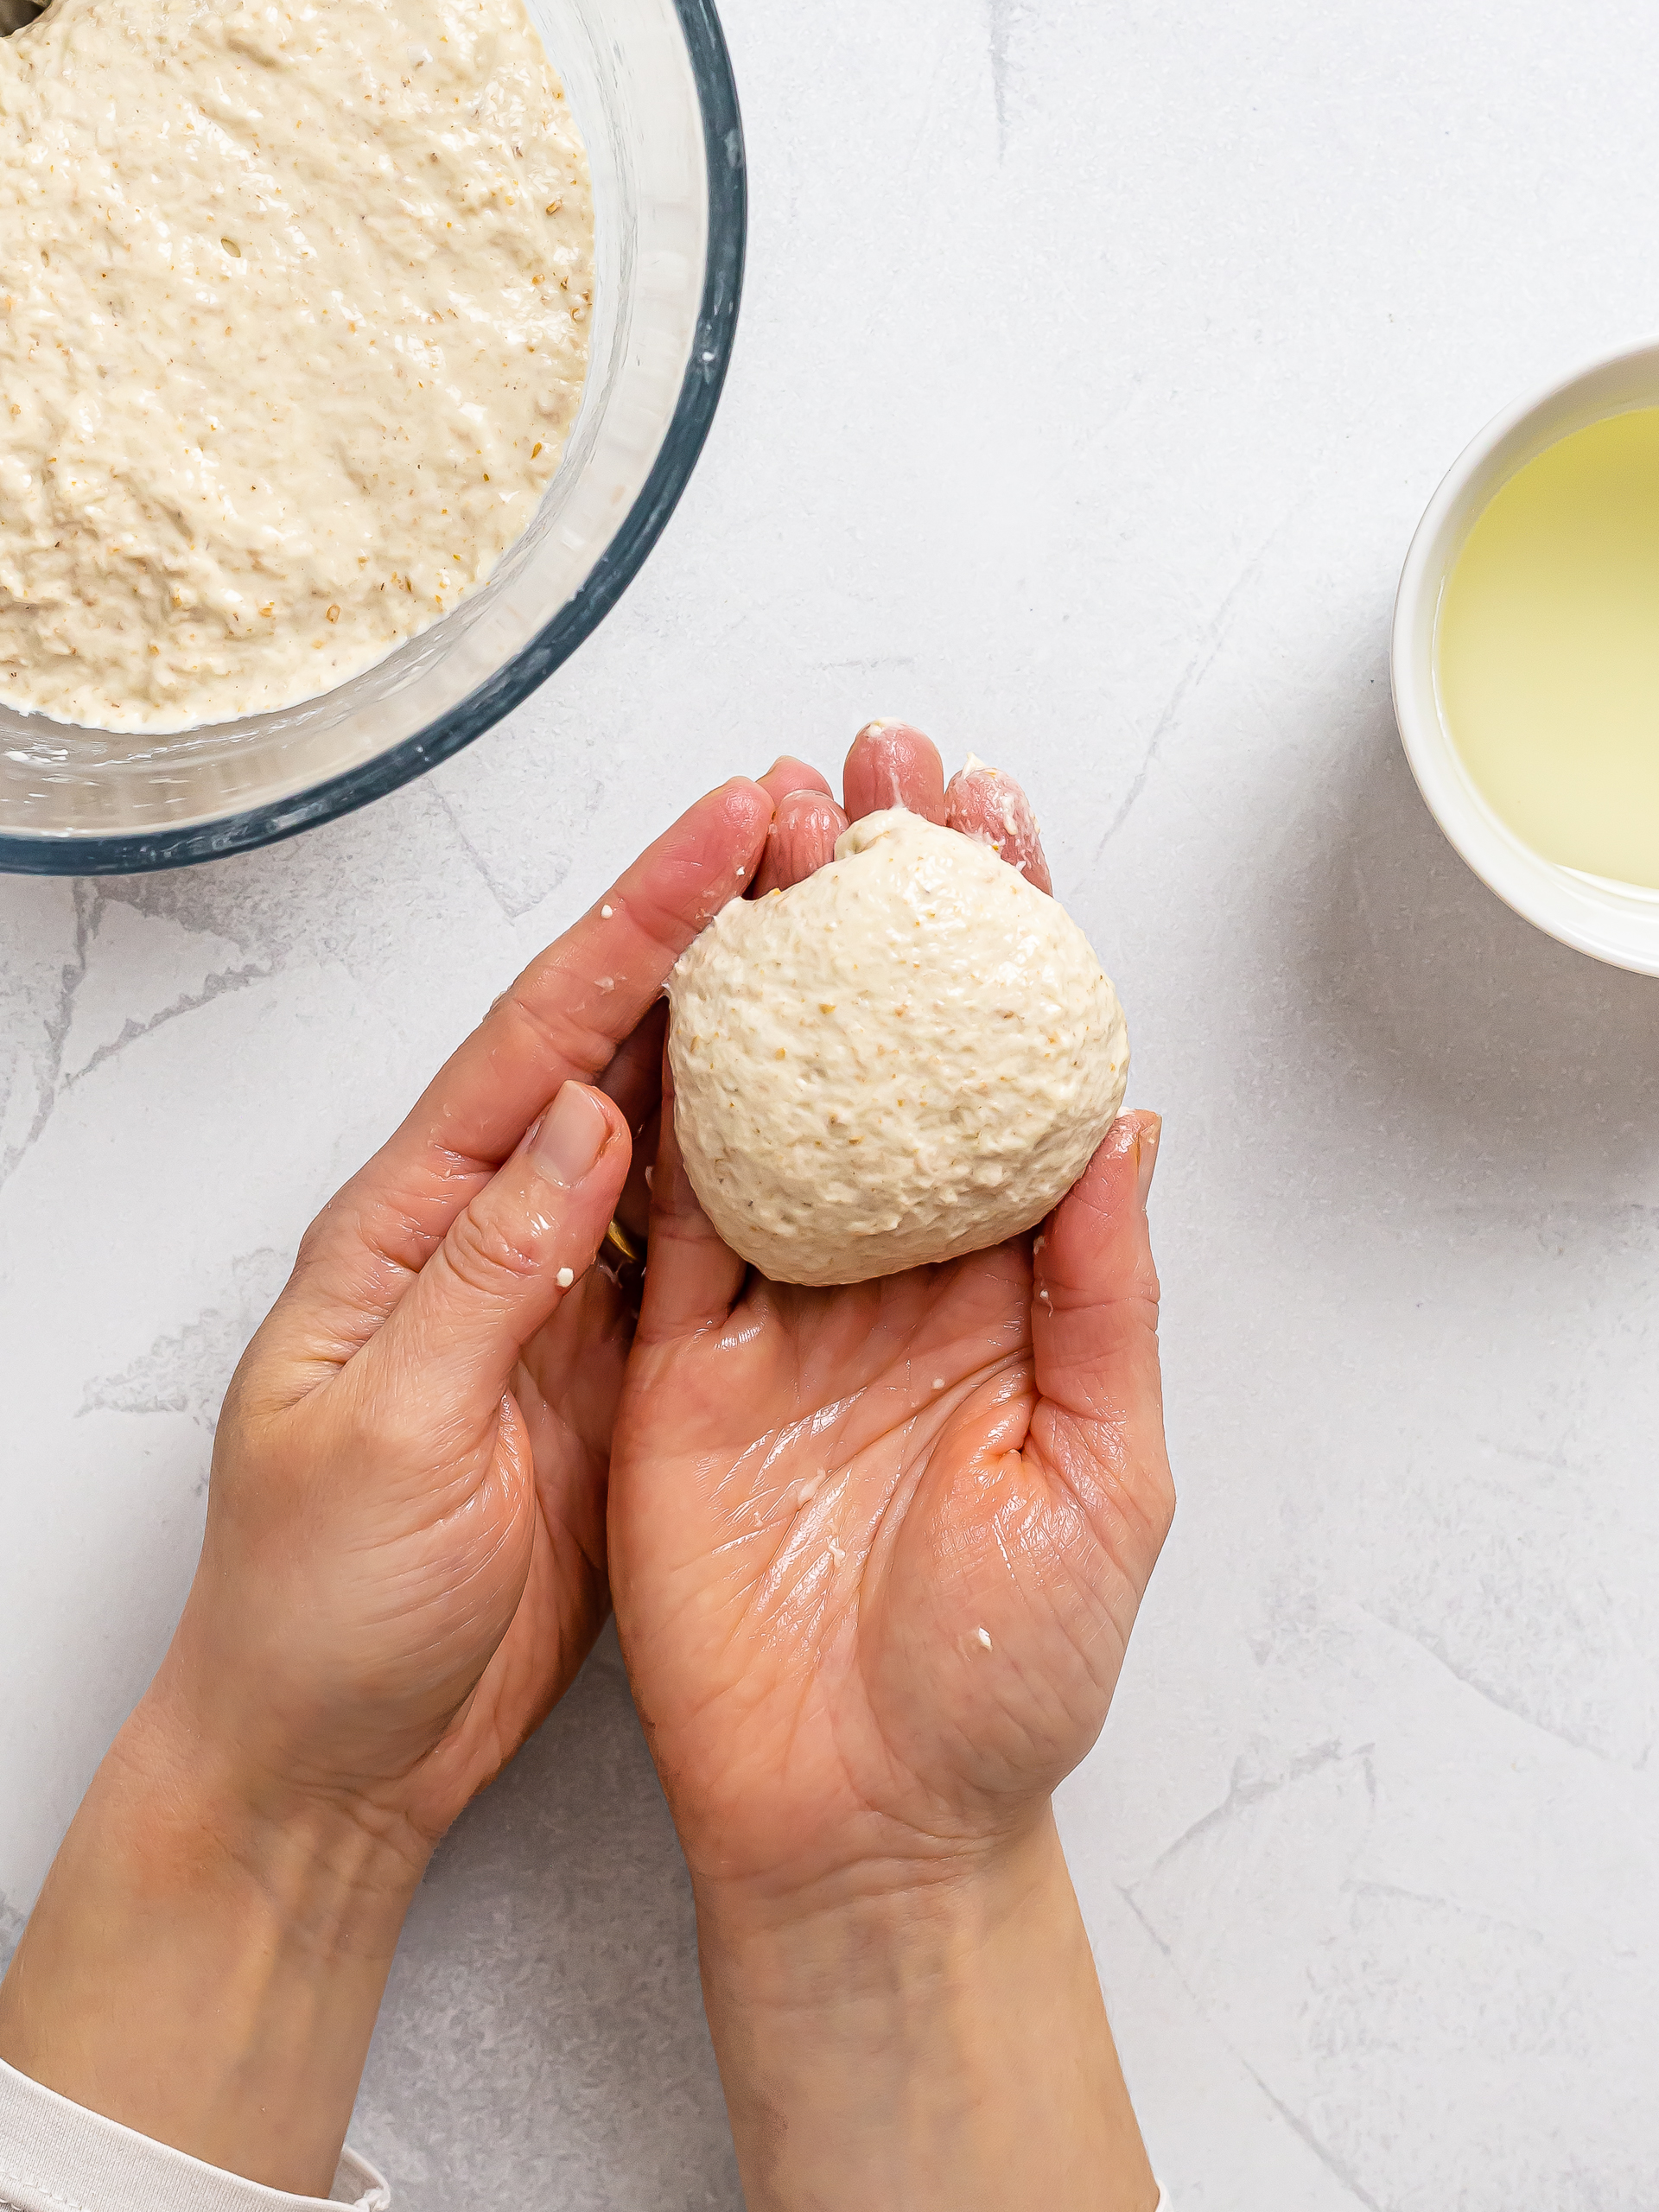 woman shaping fry bread dough ball